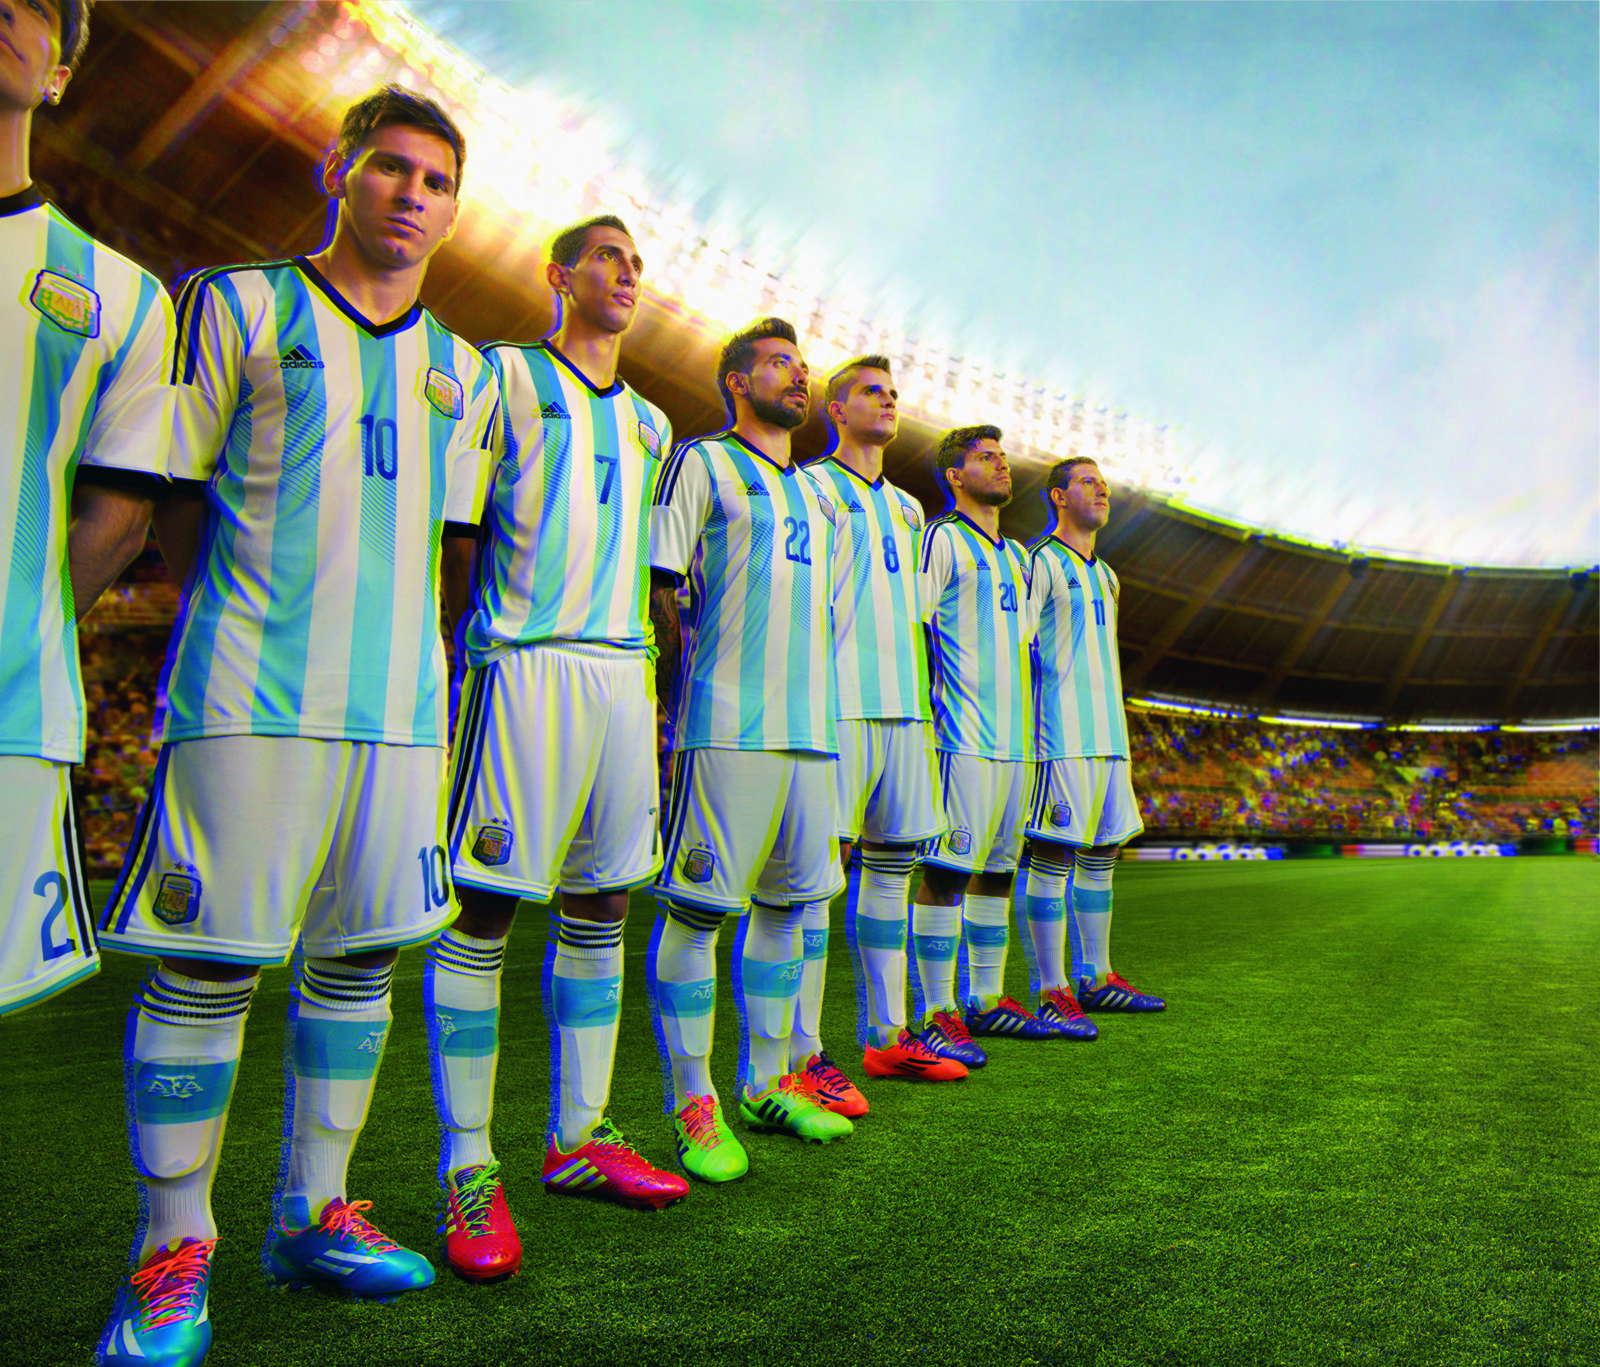 Free Argentina team Brazil World Cup 2014 HD wallpaper. Download